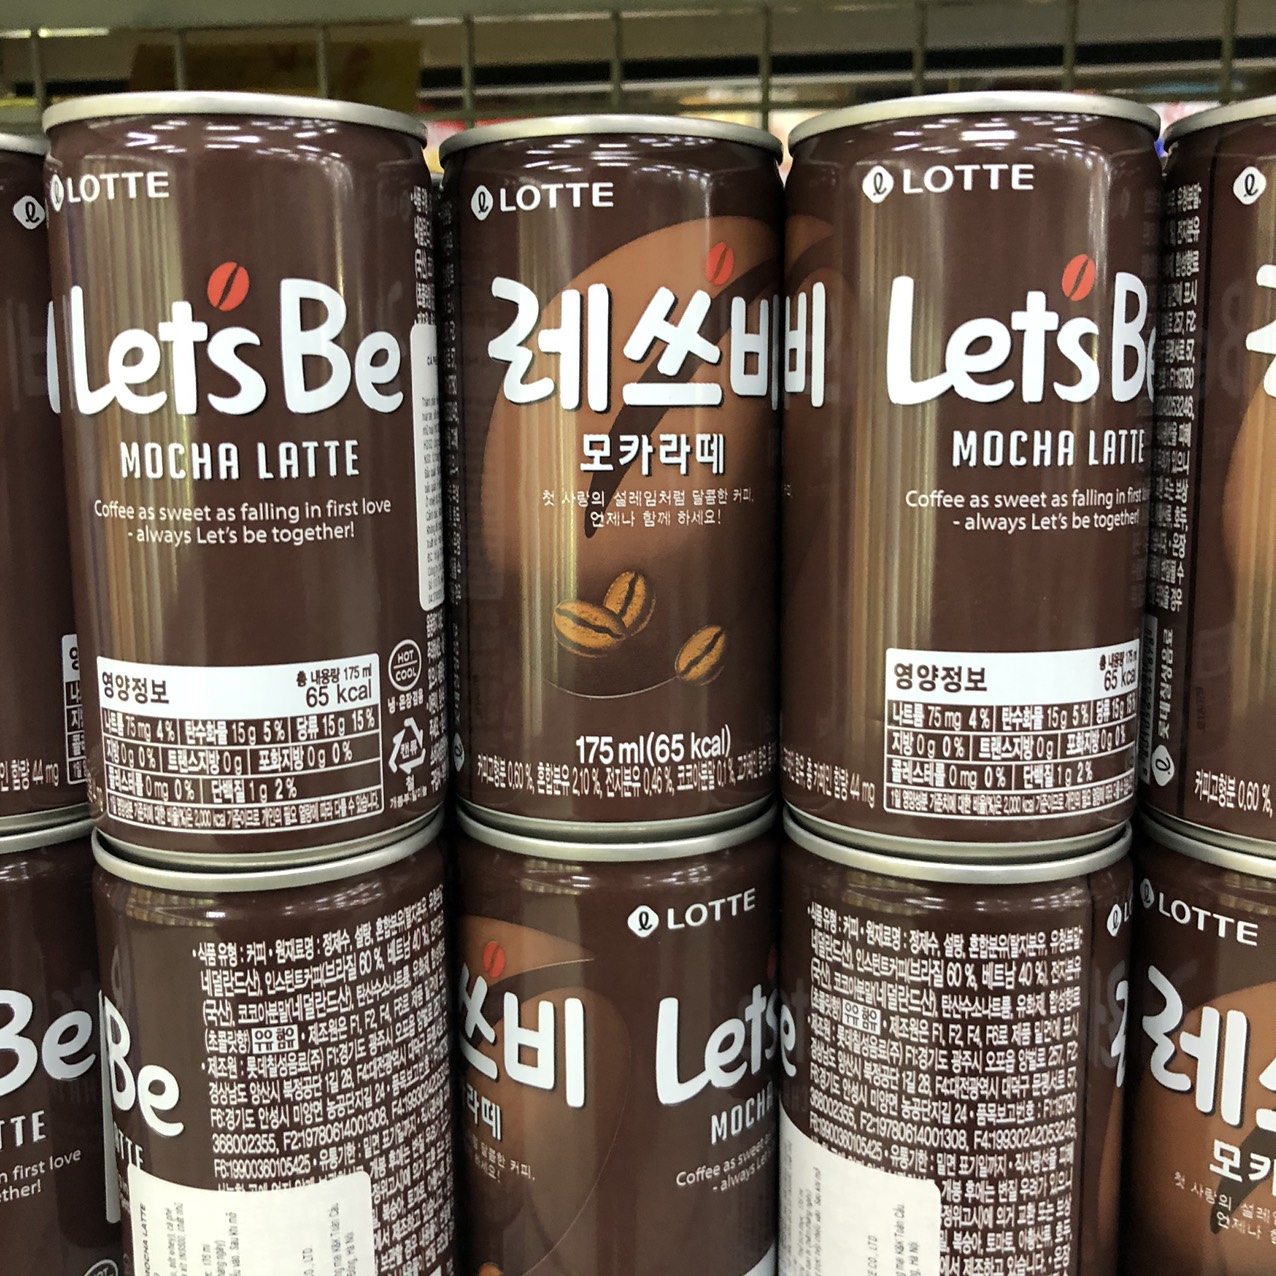 Cà Phê Uống Liền Let's Be Mocha Latte Lotte Hàn Quốc  Lon 175ml